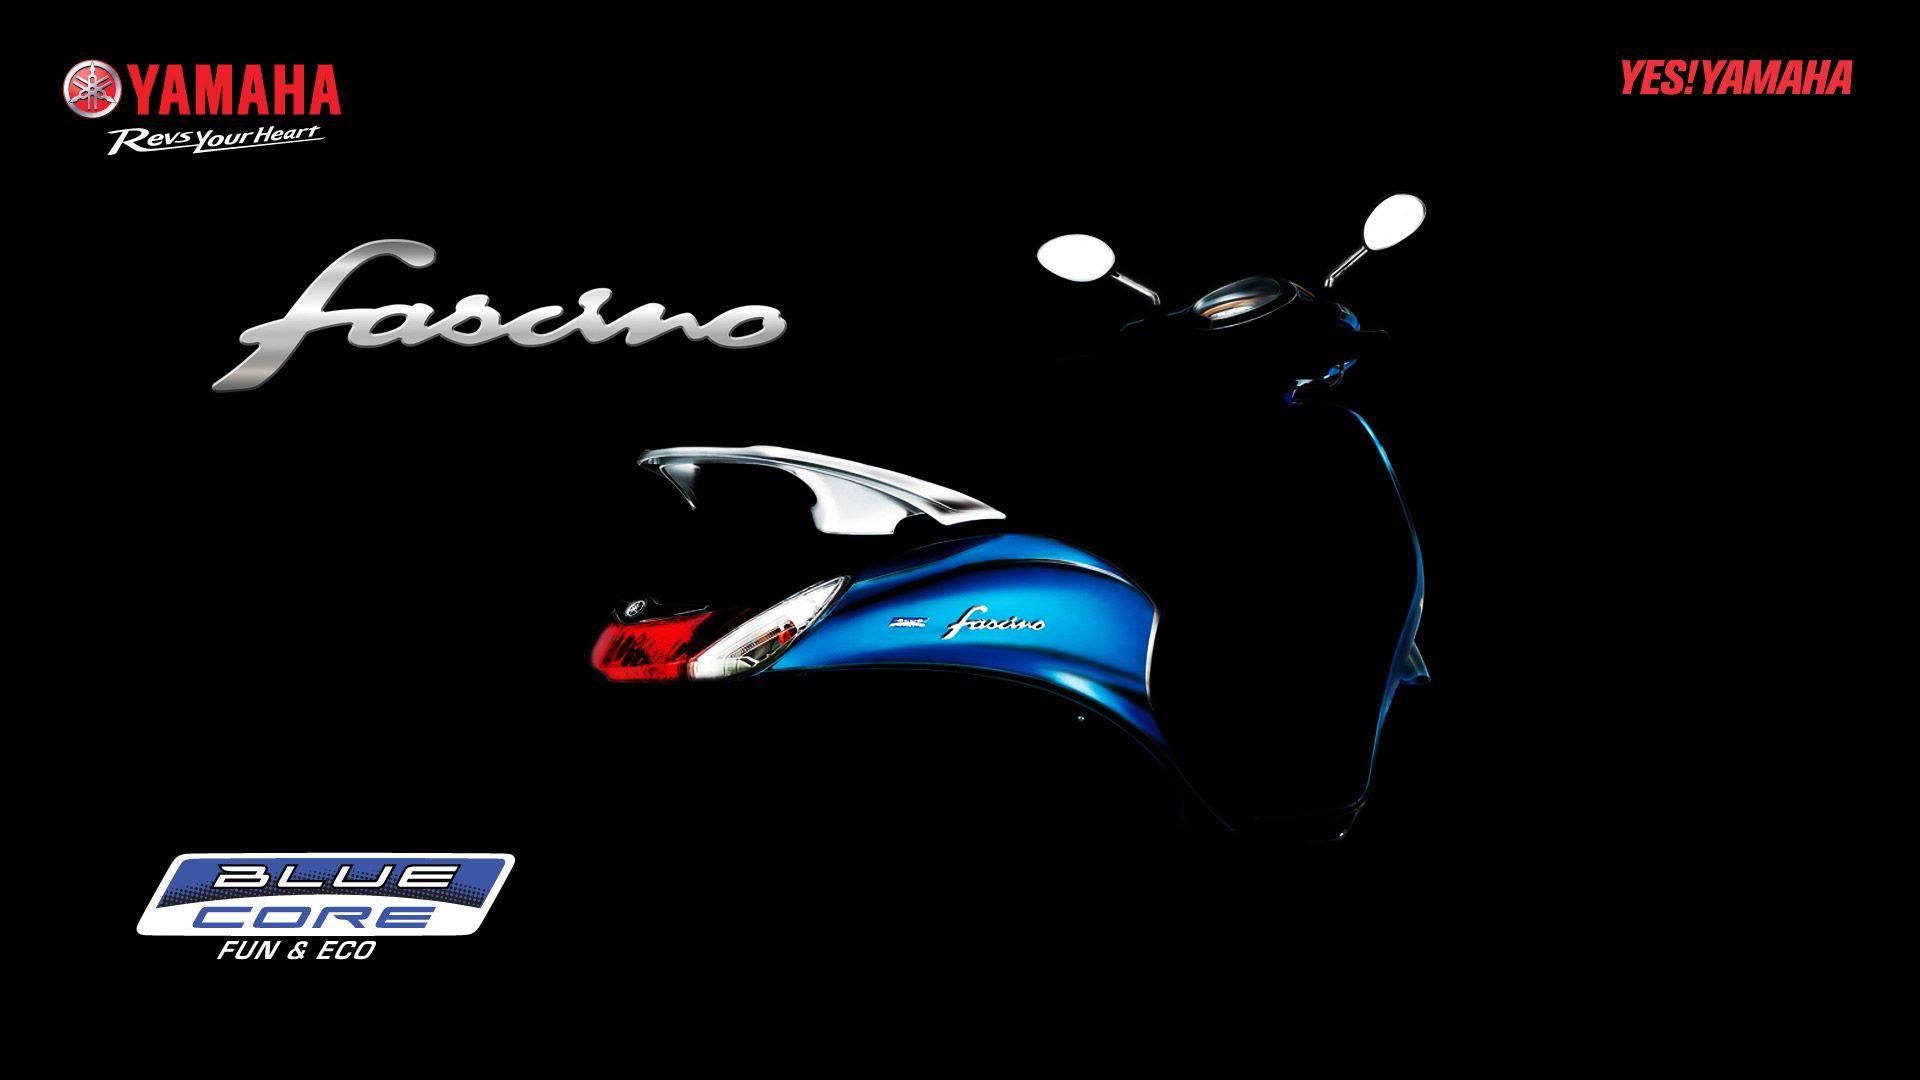 Official Wallpaper of Yamaha Fascino